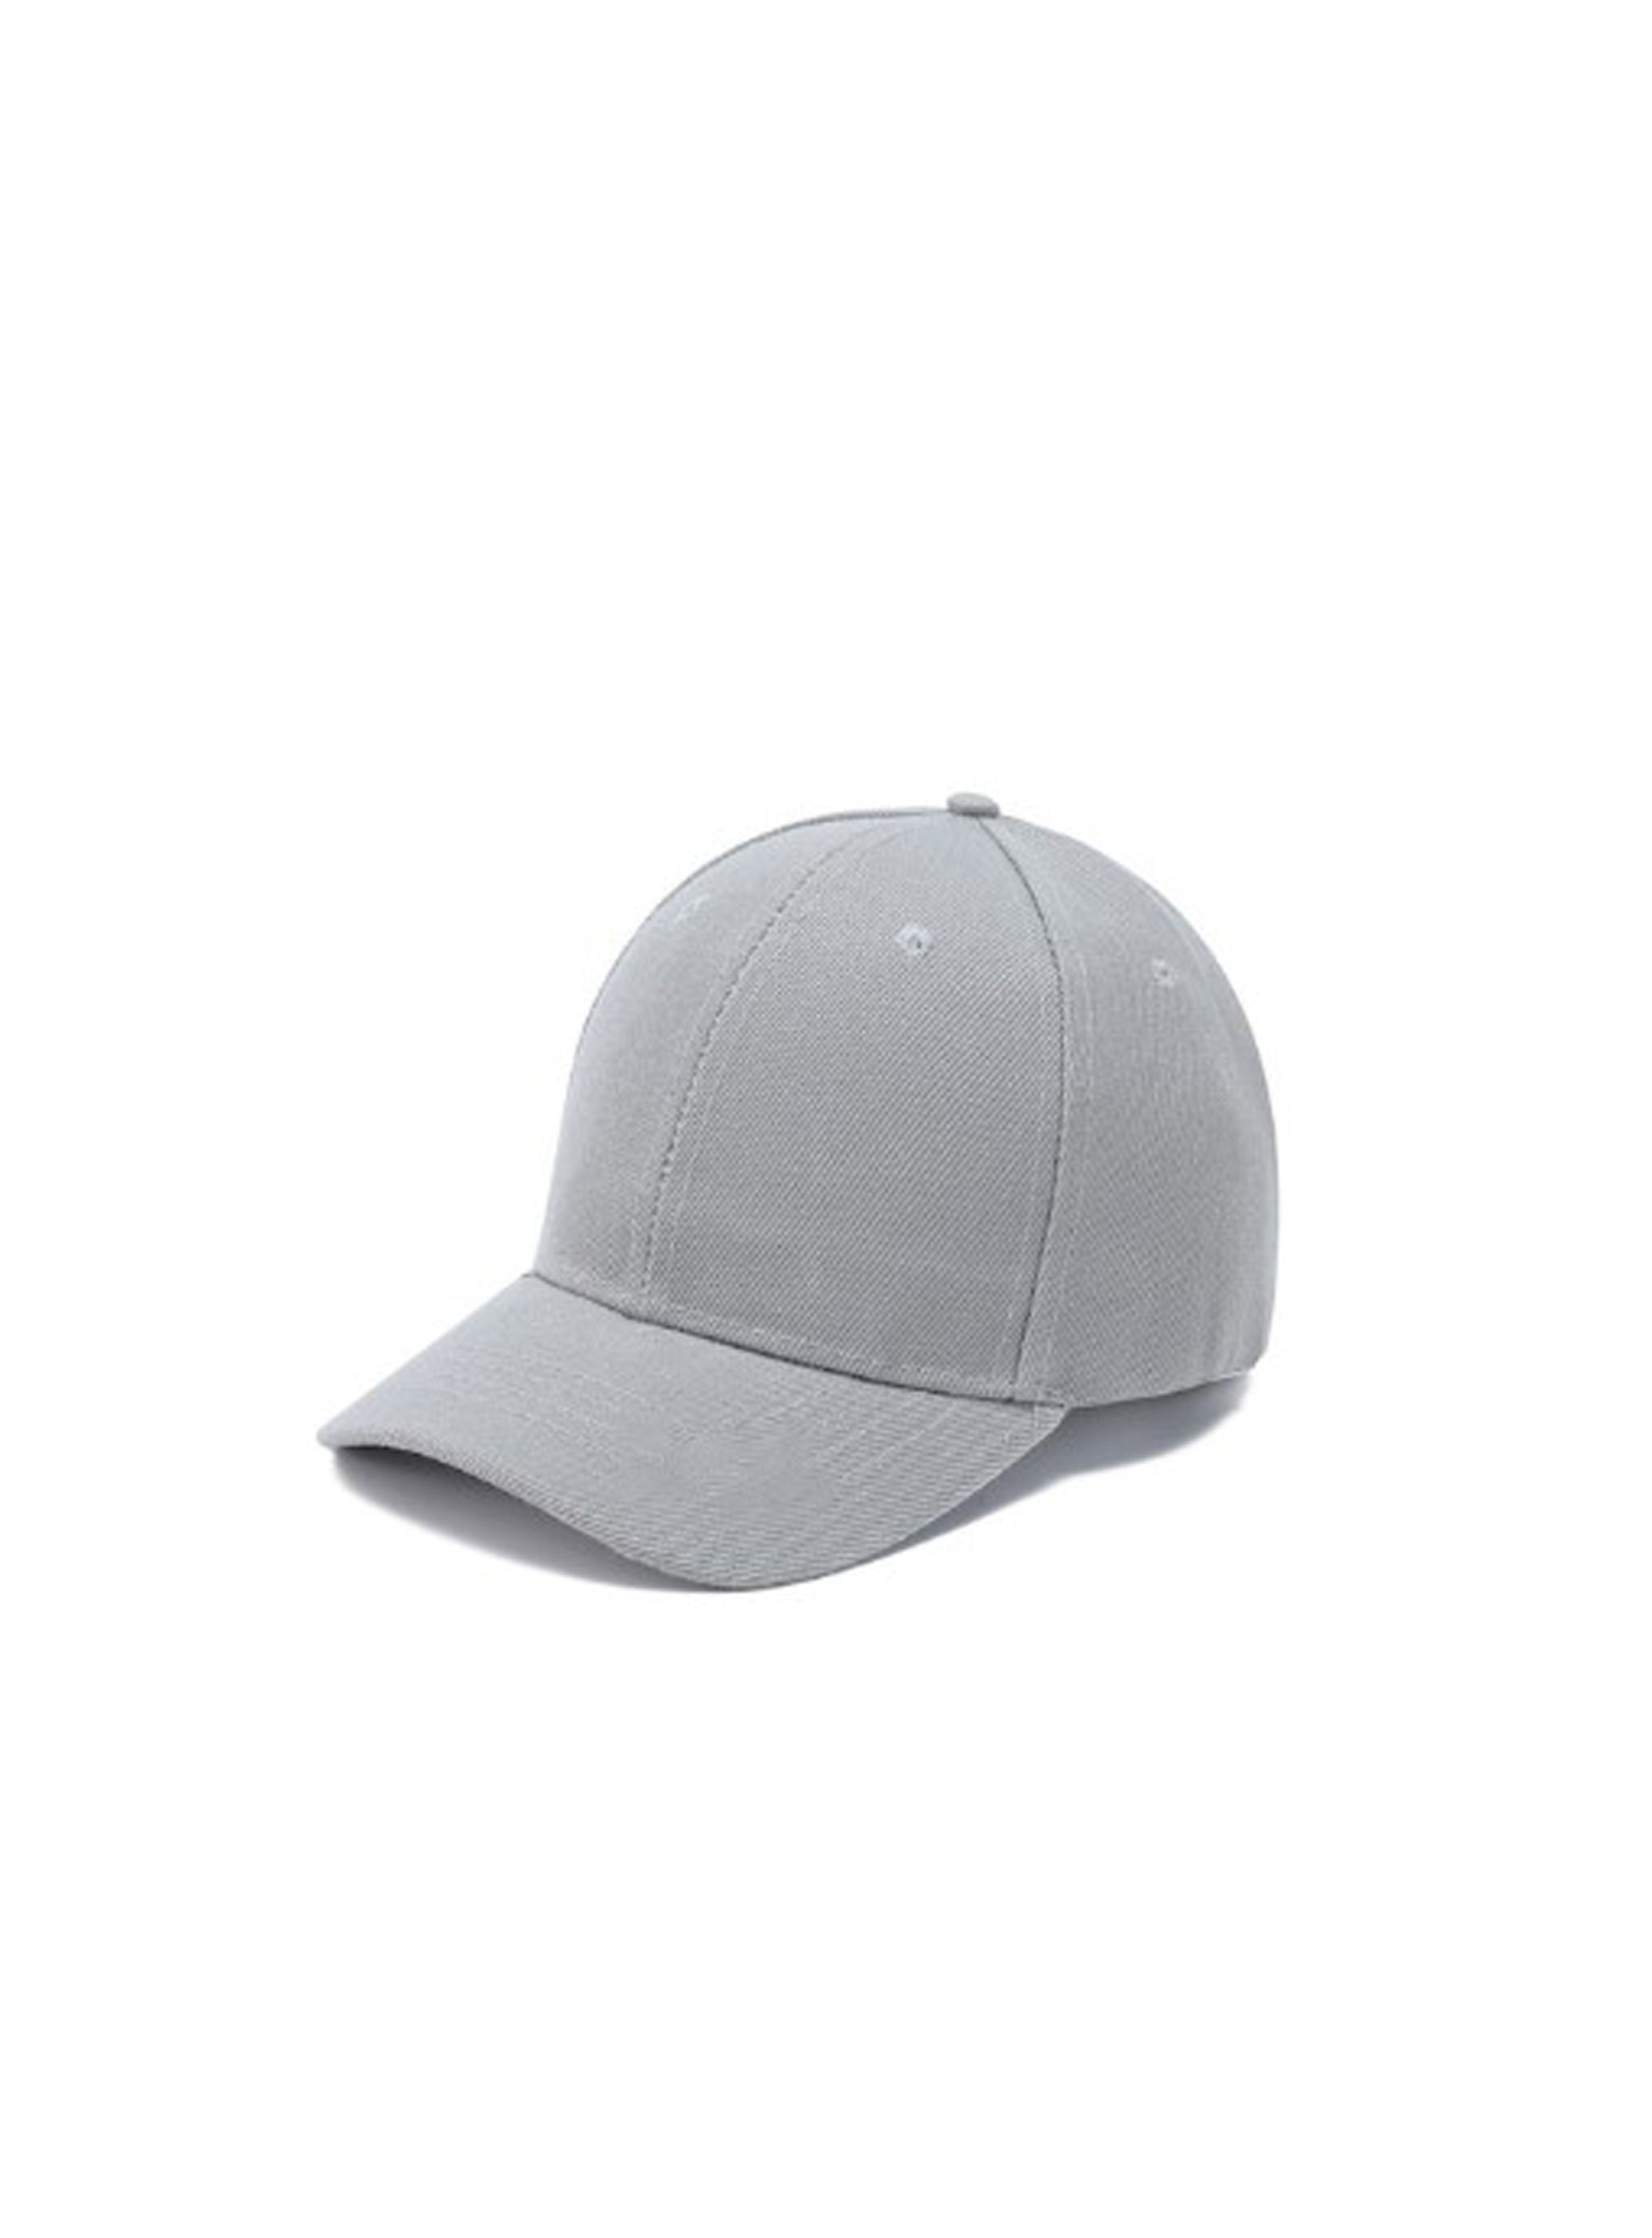 metal gray cap with adjustable strap